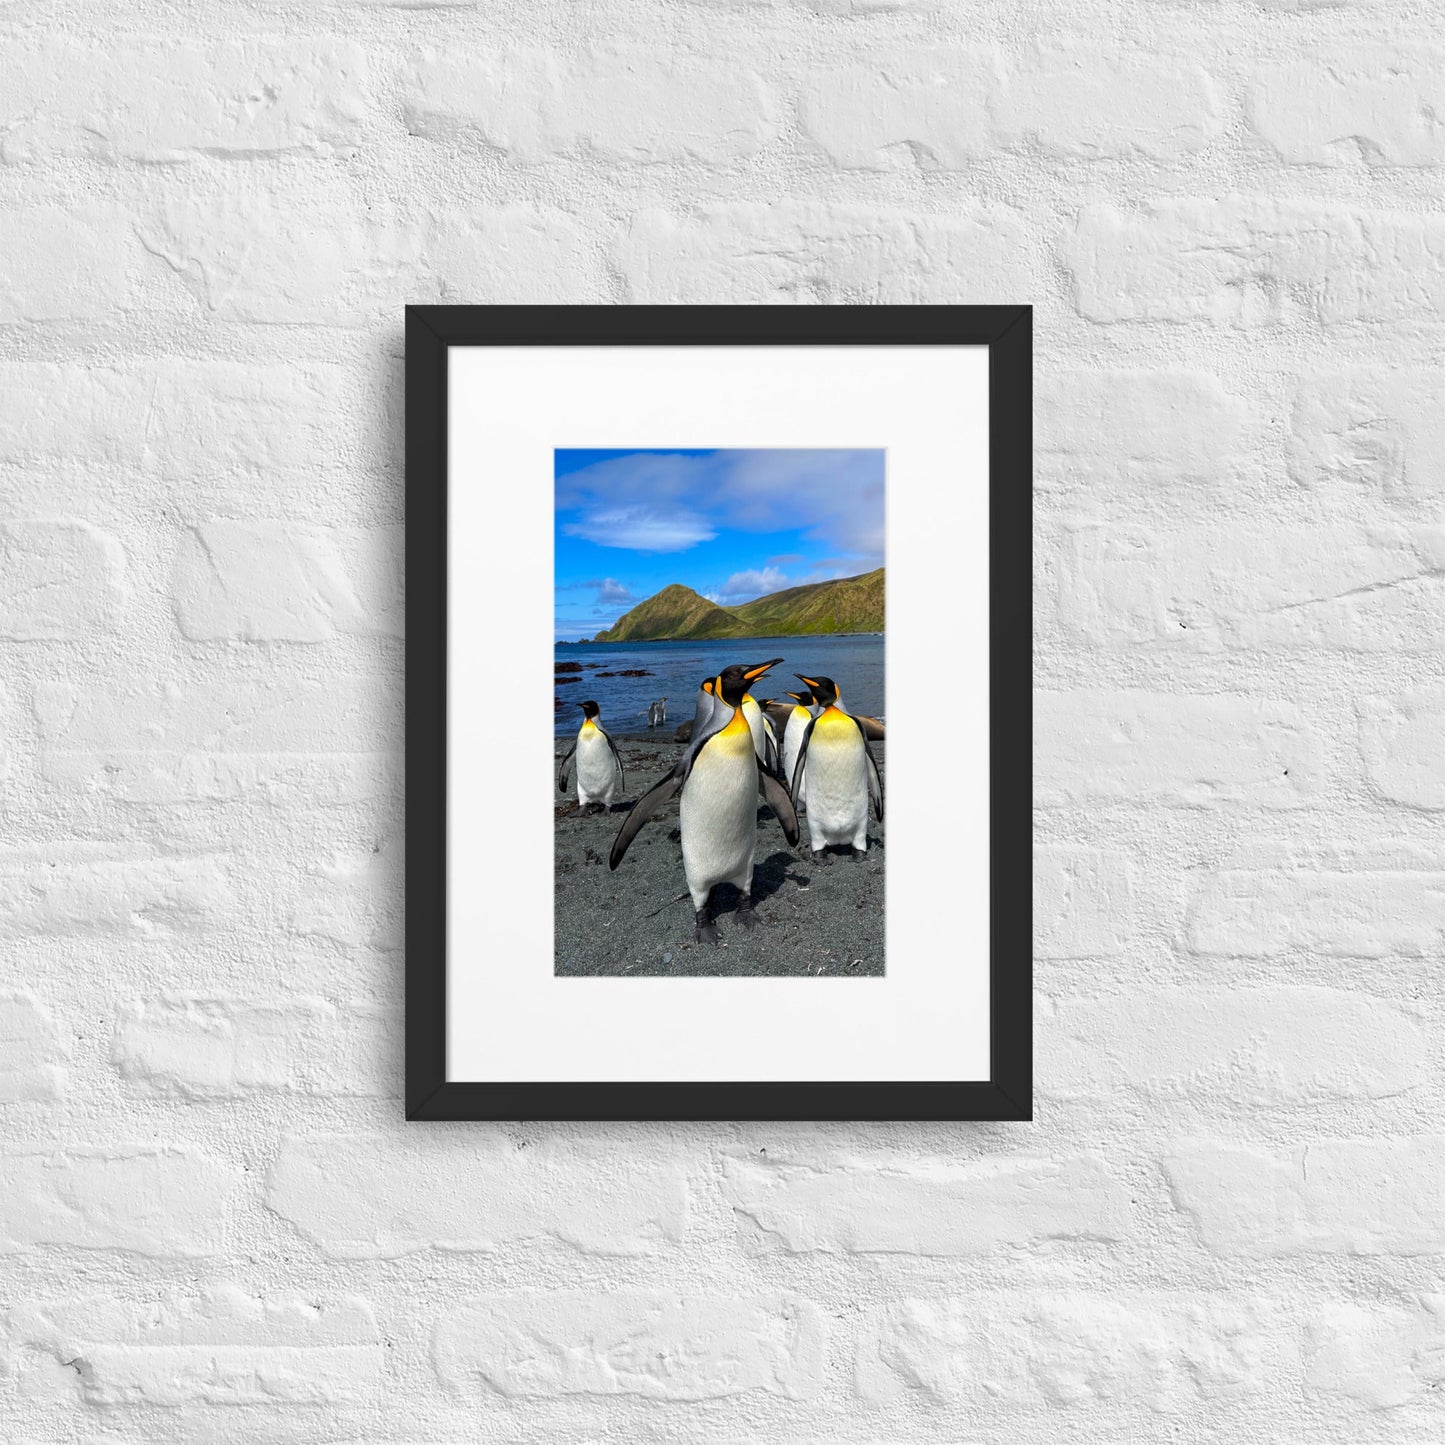 King Penguin with groupies- Matte Paper Framed Poster With Mat - Jamie Van Jones#Nature#